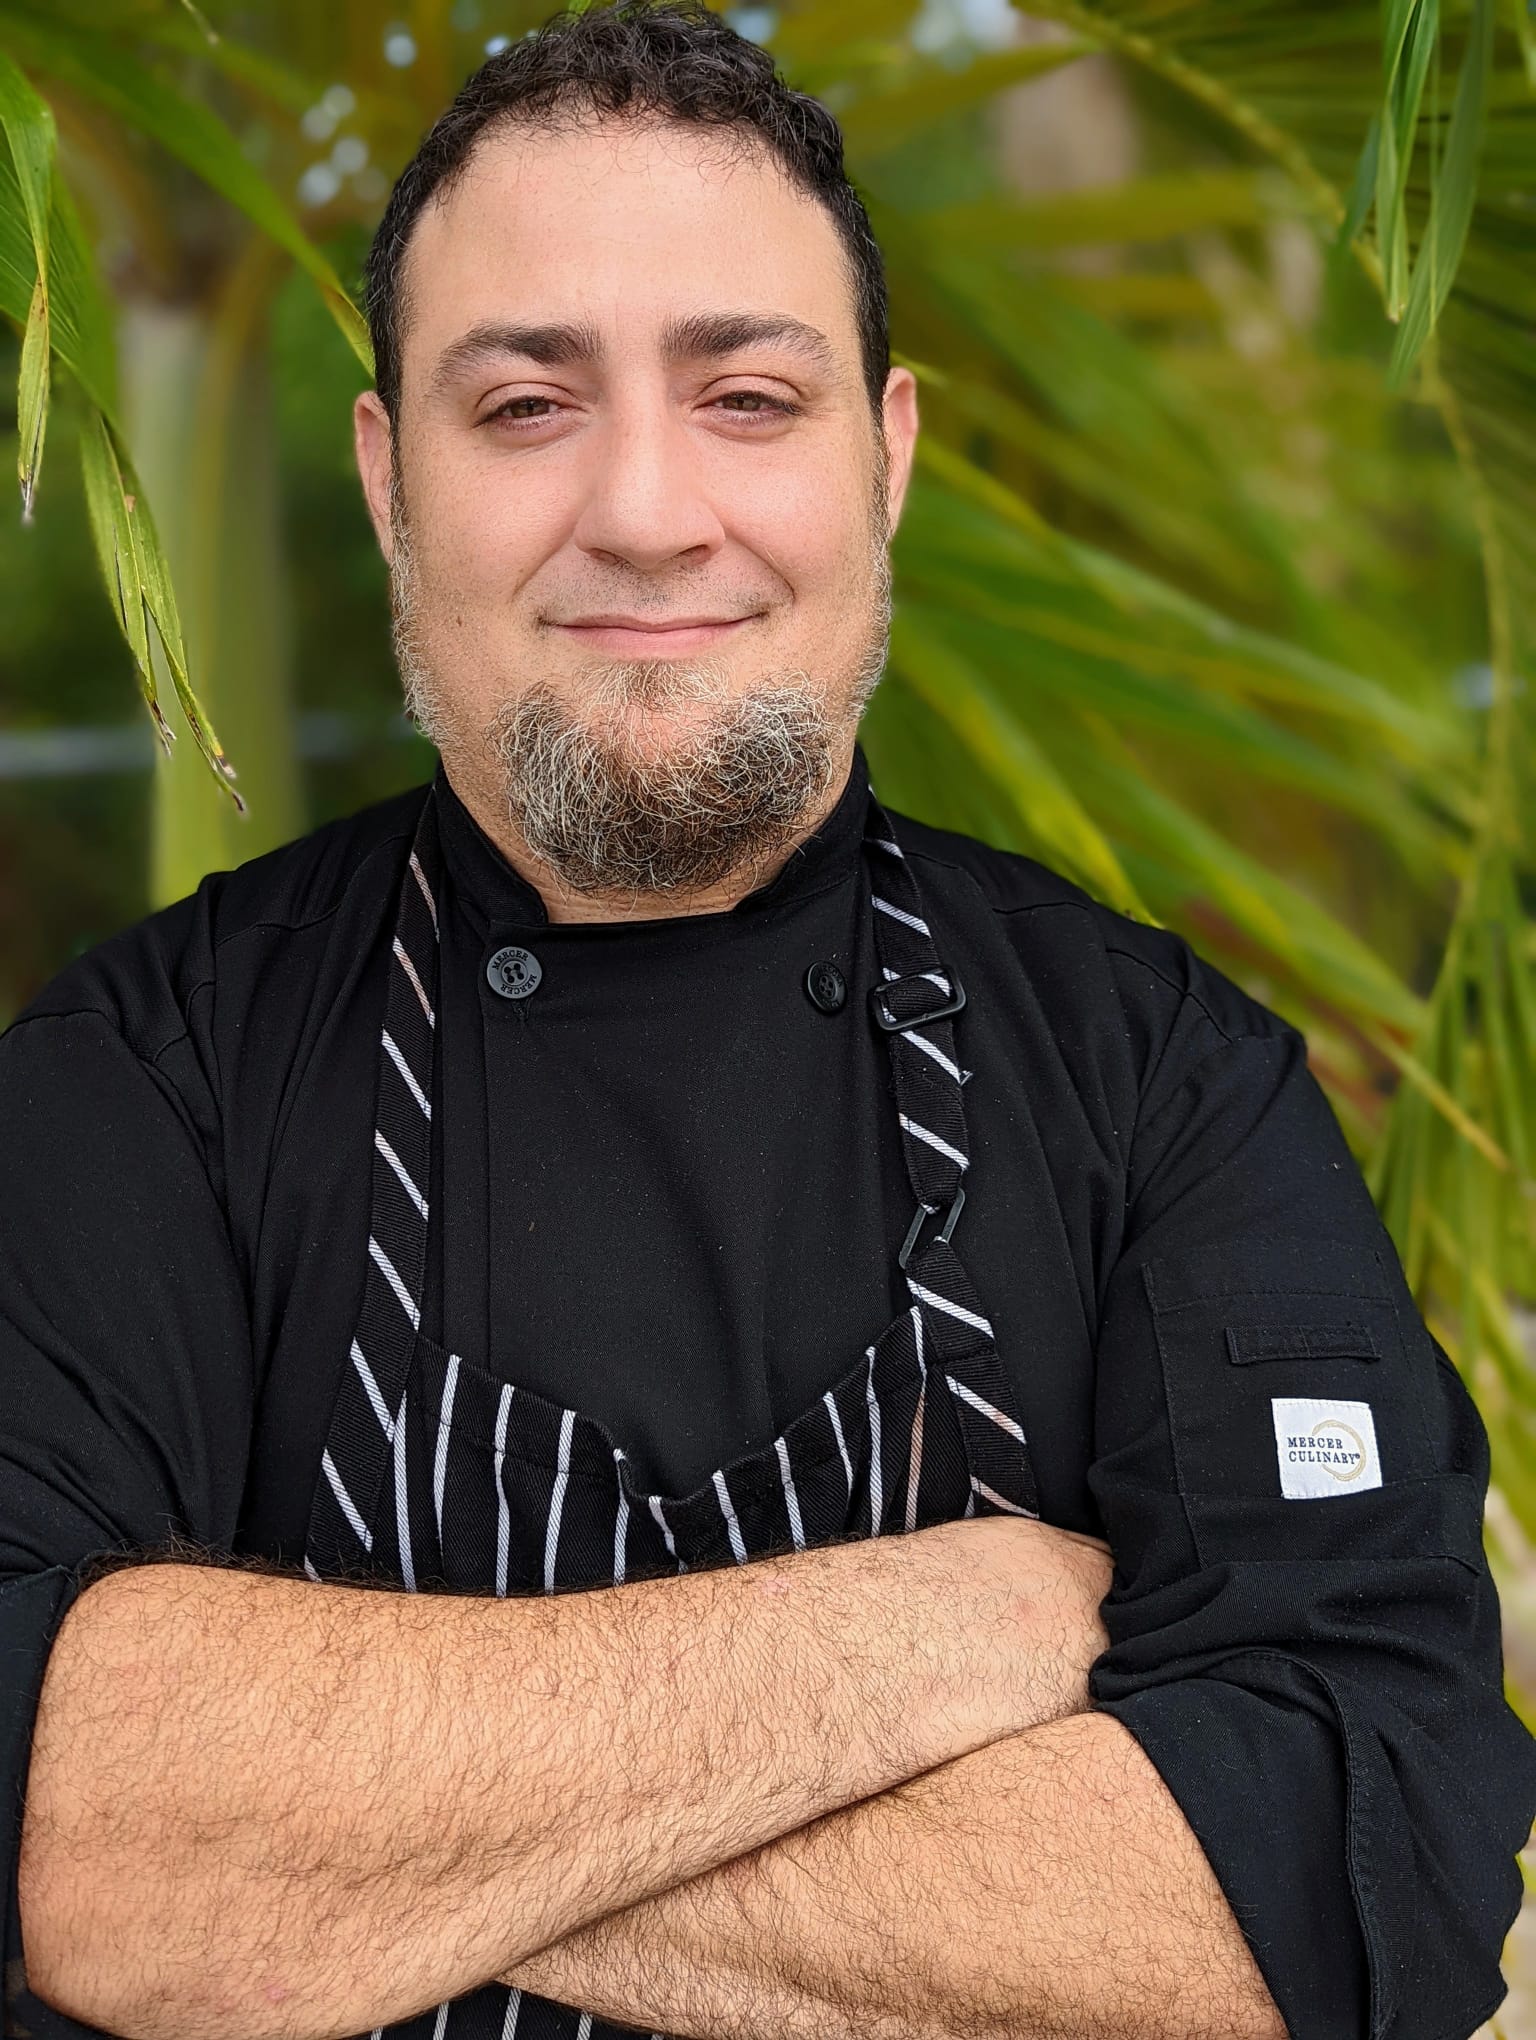 Chef Amedo Masala